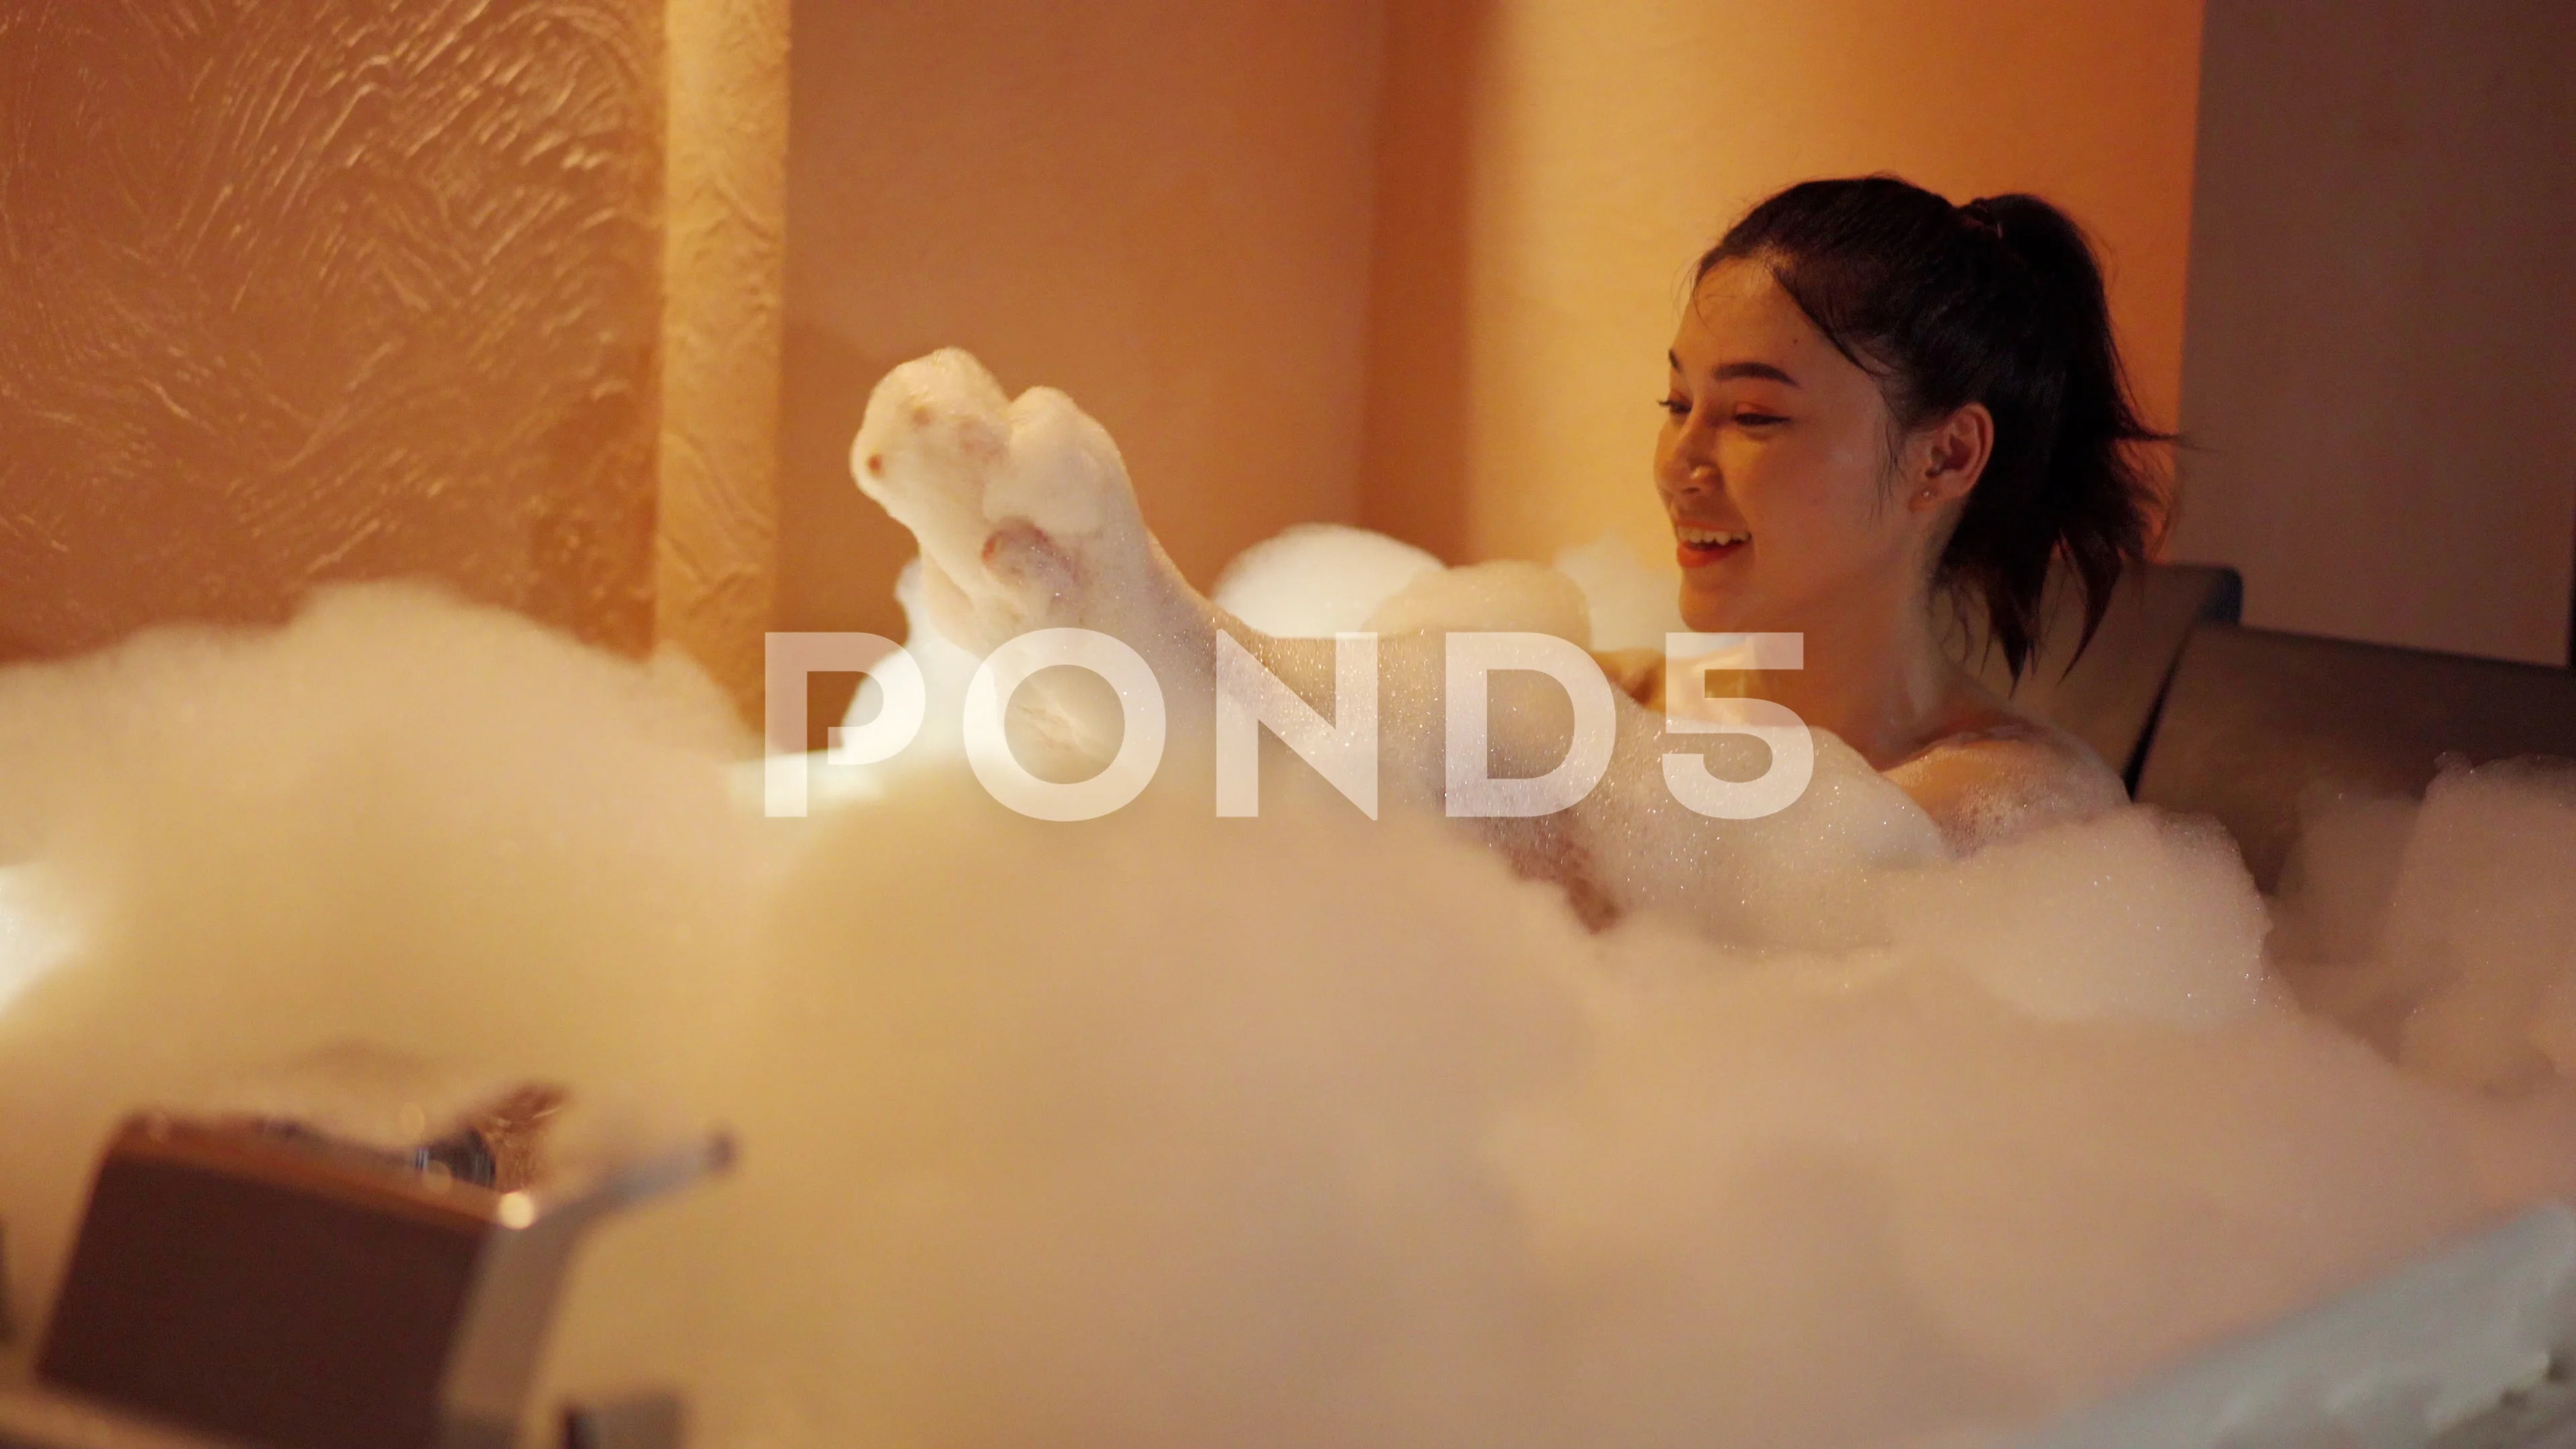 https://images.pond5.com/woman-taking-bubble-bath-bathtub-footage-138320325_prevstill.jpeg